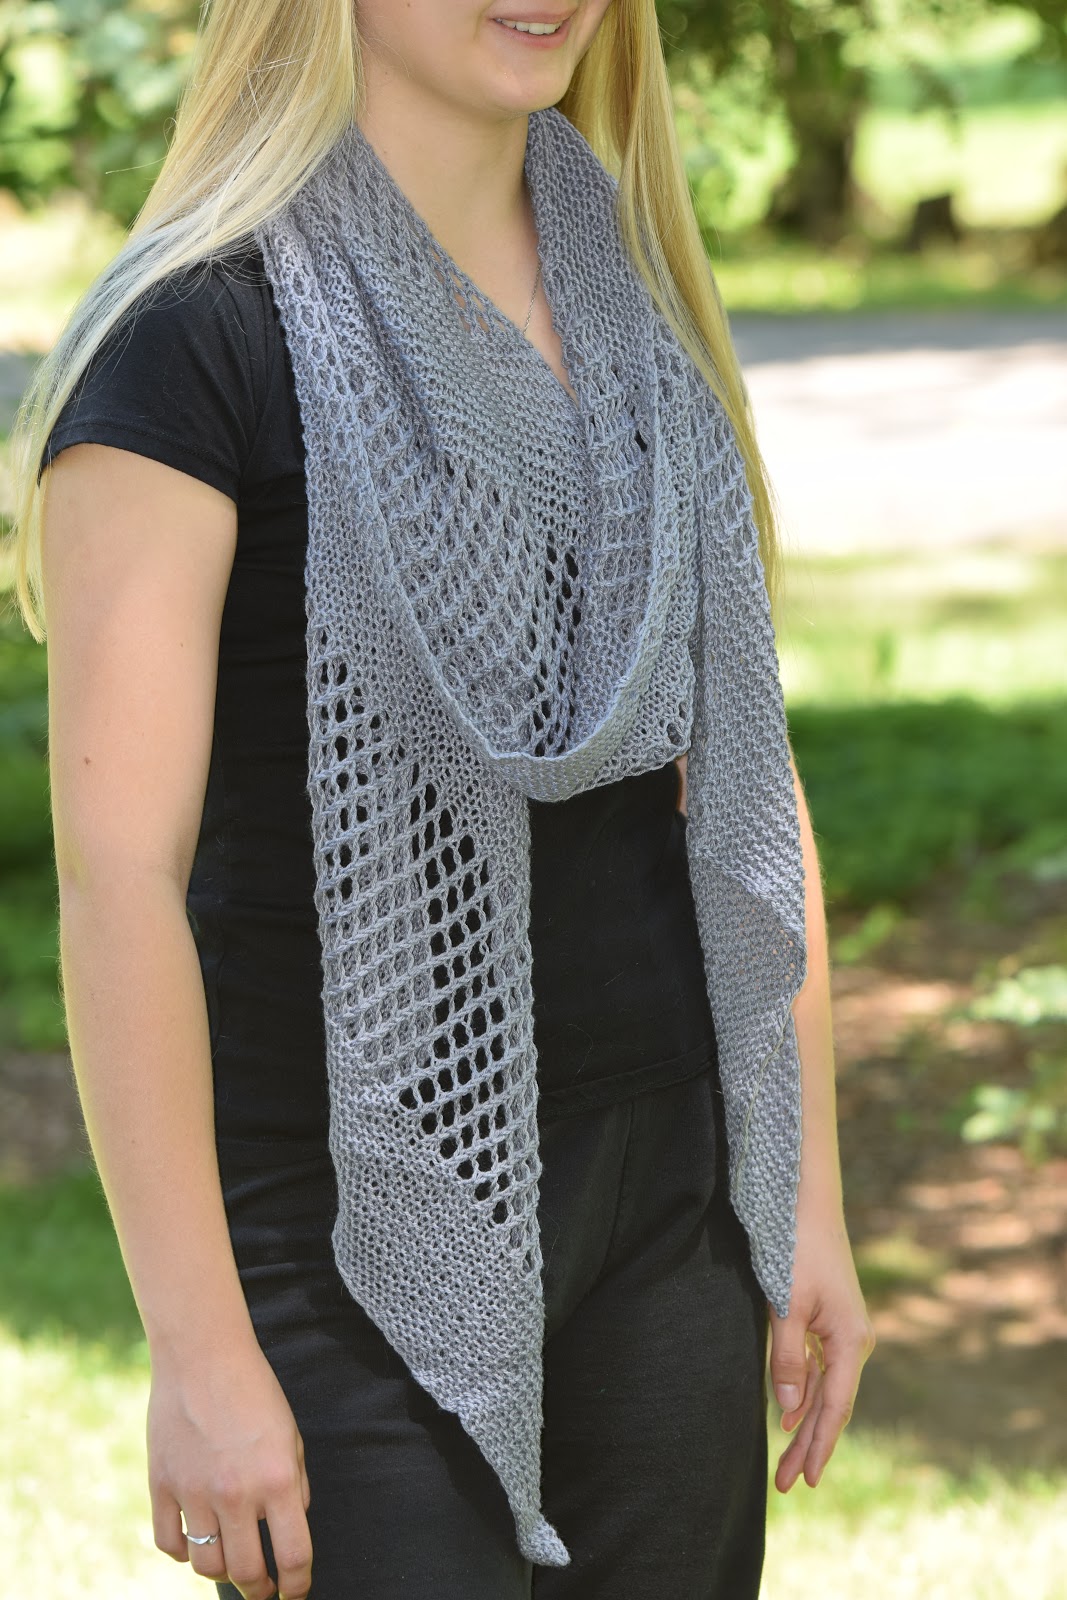 Silver Bias Lace Scarf | Infinity scarf knitting pattern, Scarf pattern